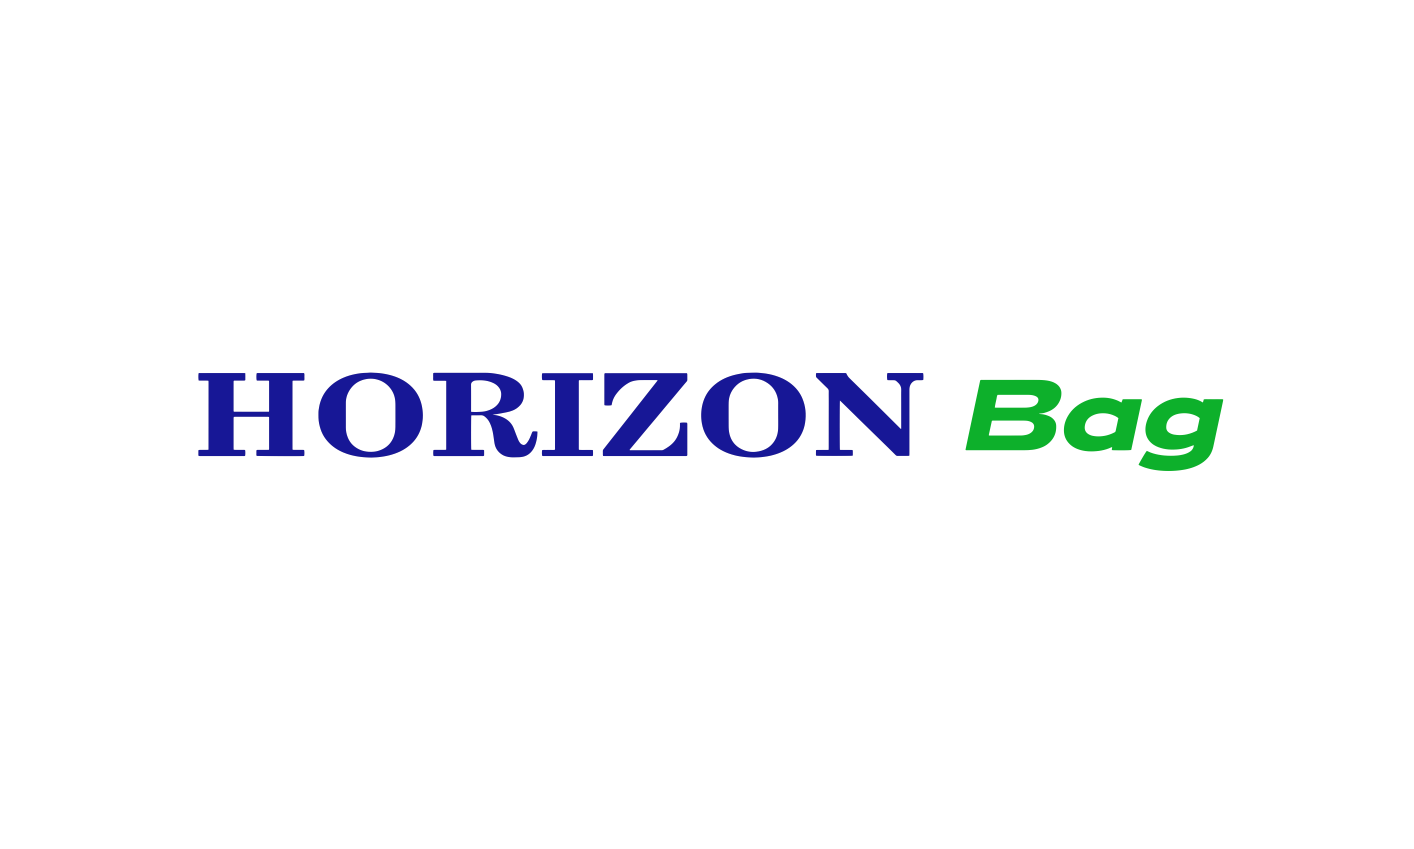 HORIZON BAG